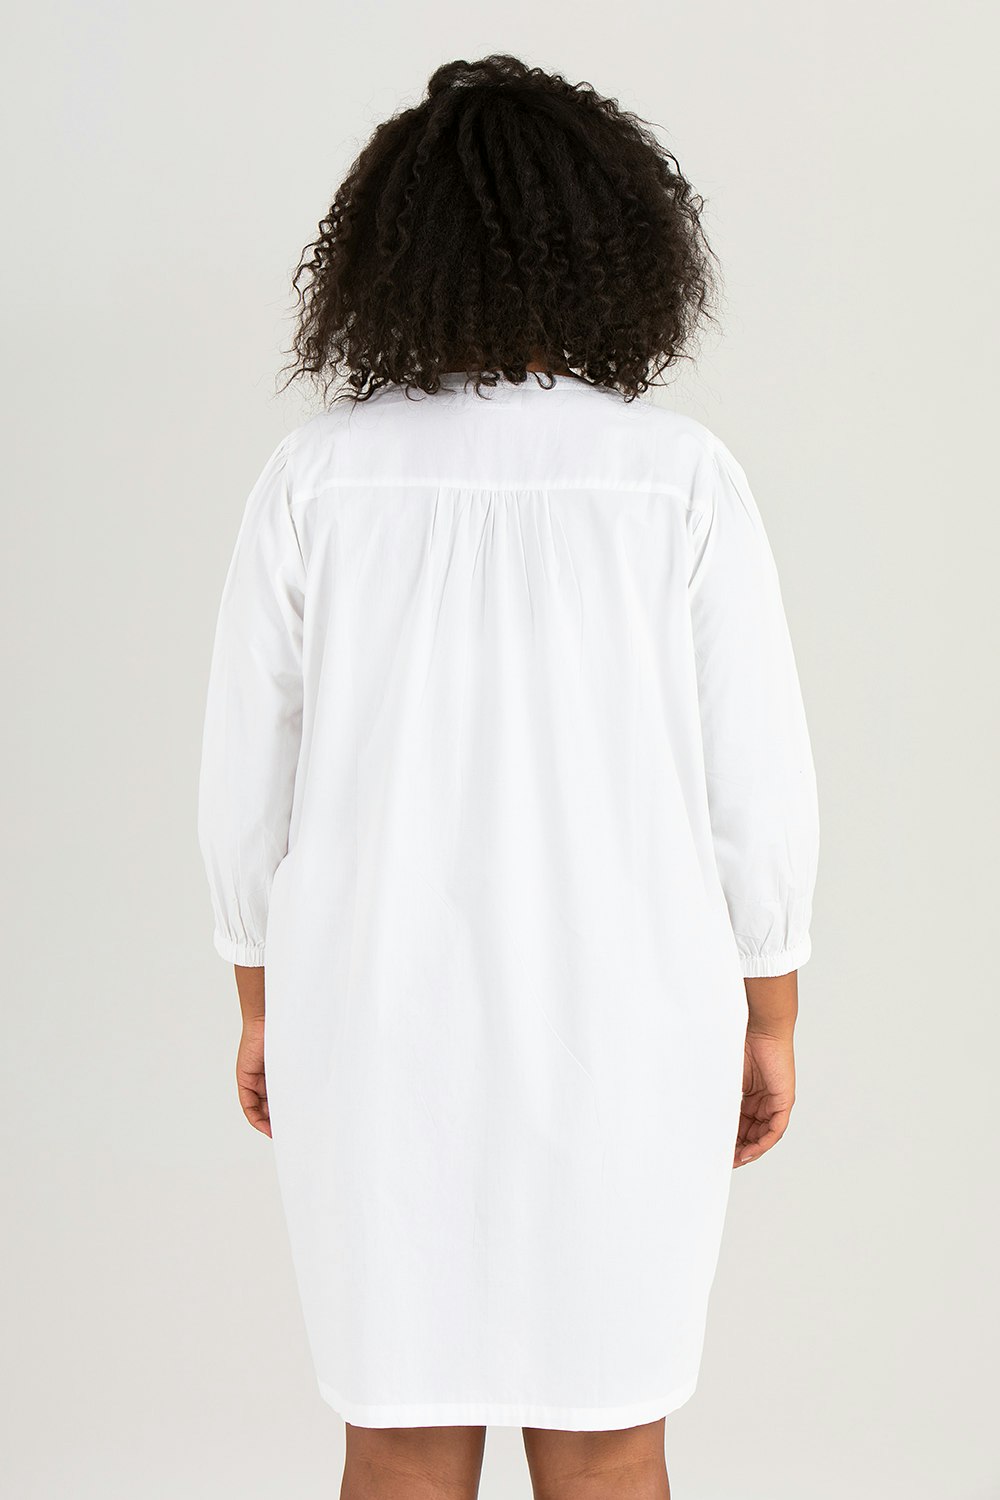 Silje dress/shirt white